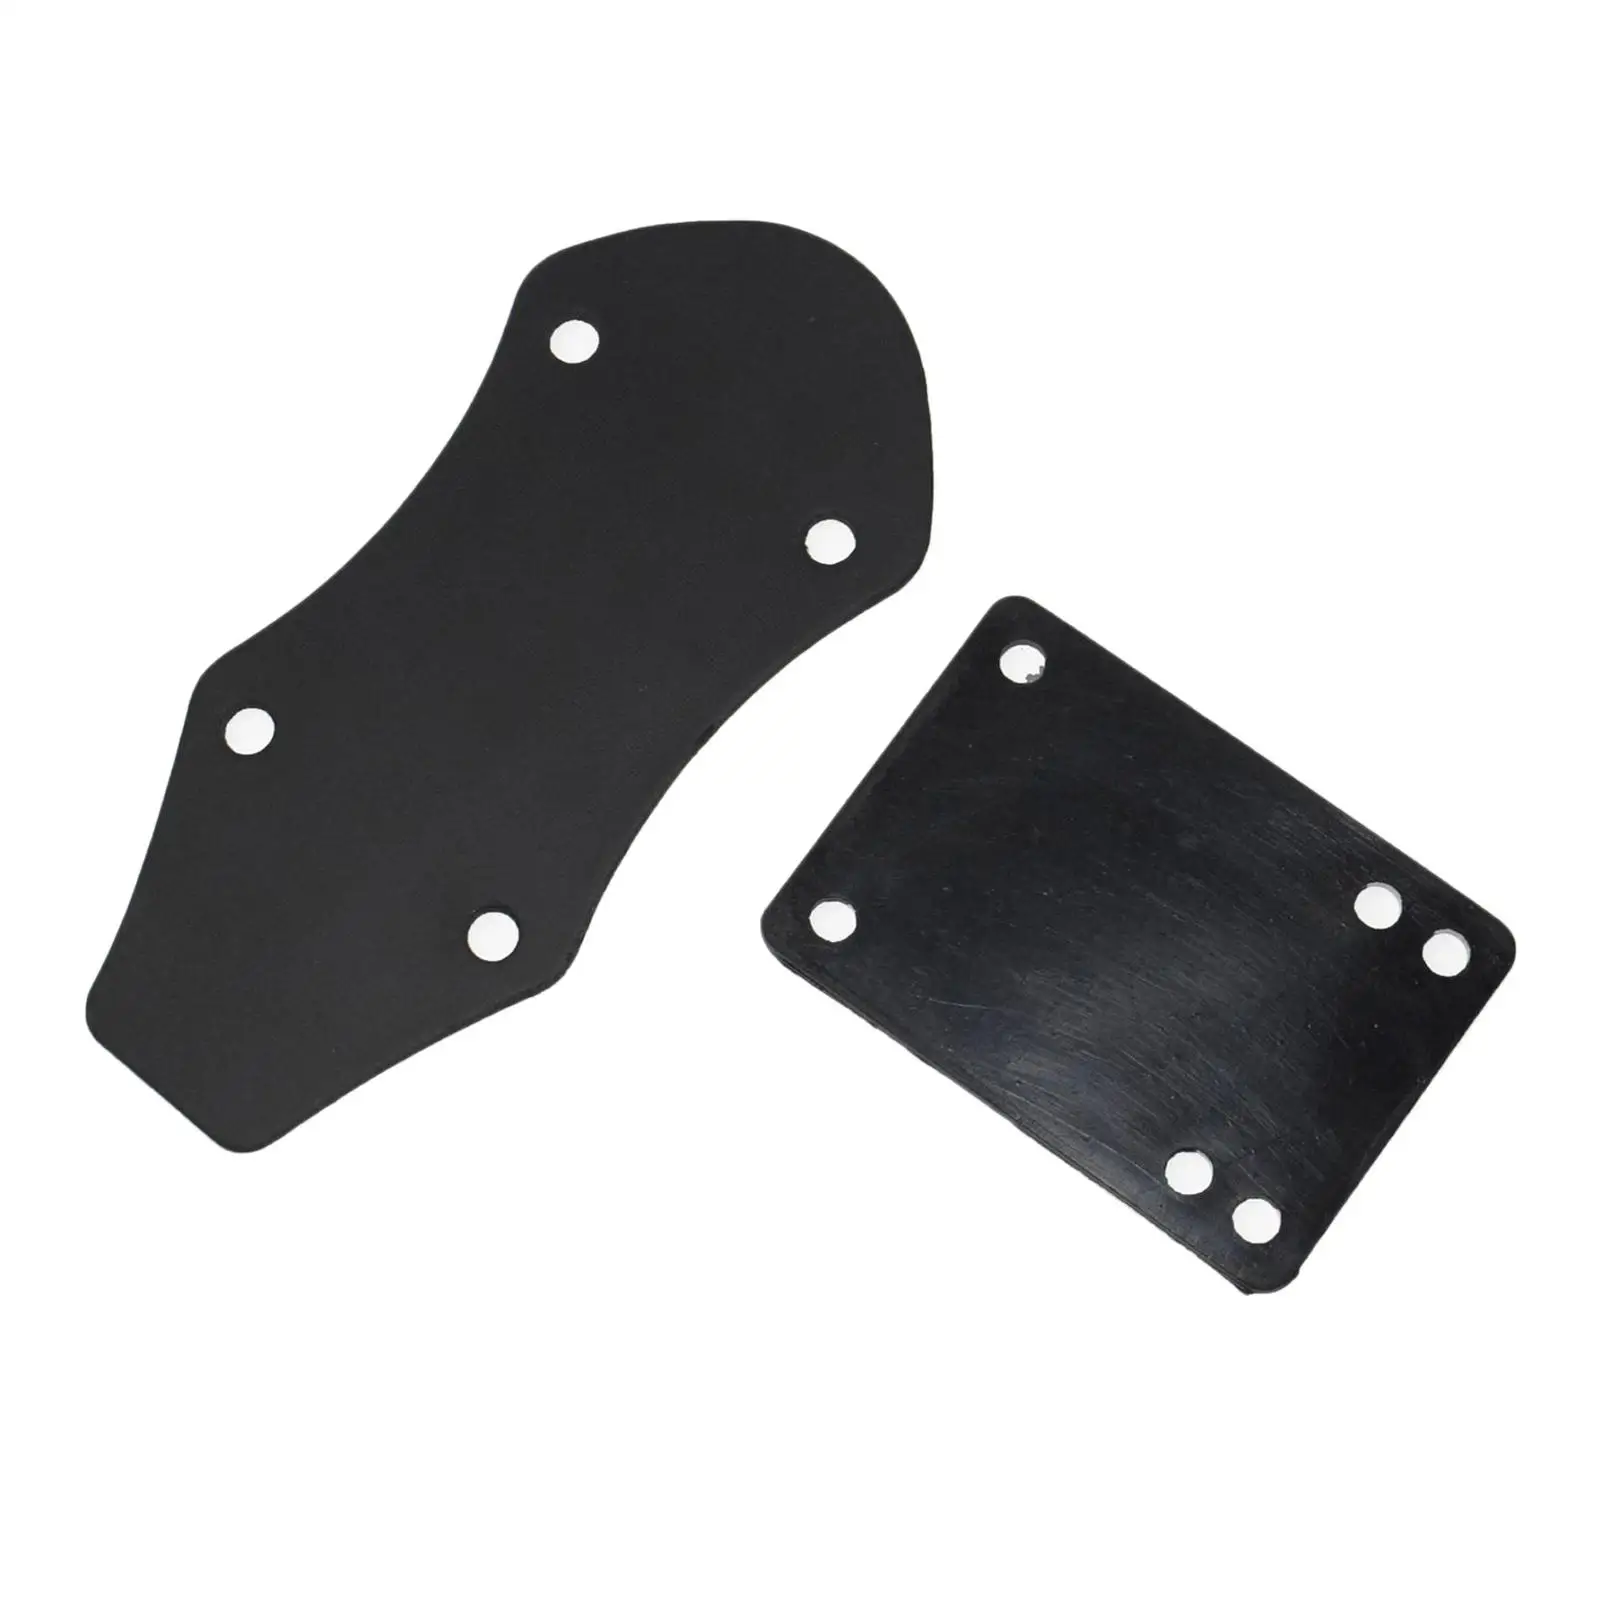 2pcs 3 mm Skateboard  Pads Soft Longboard Shock  Pads Black Shockpads for Impact Absorption